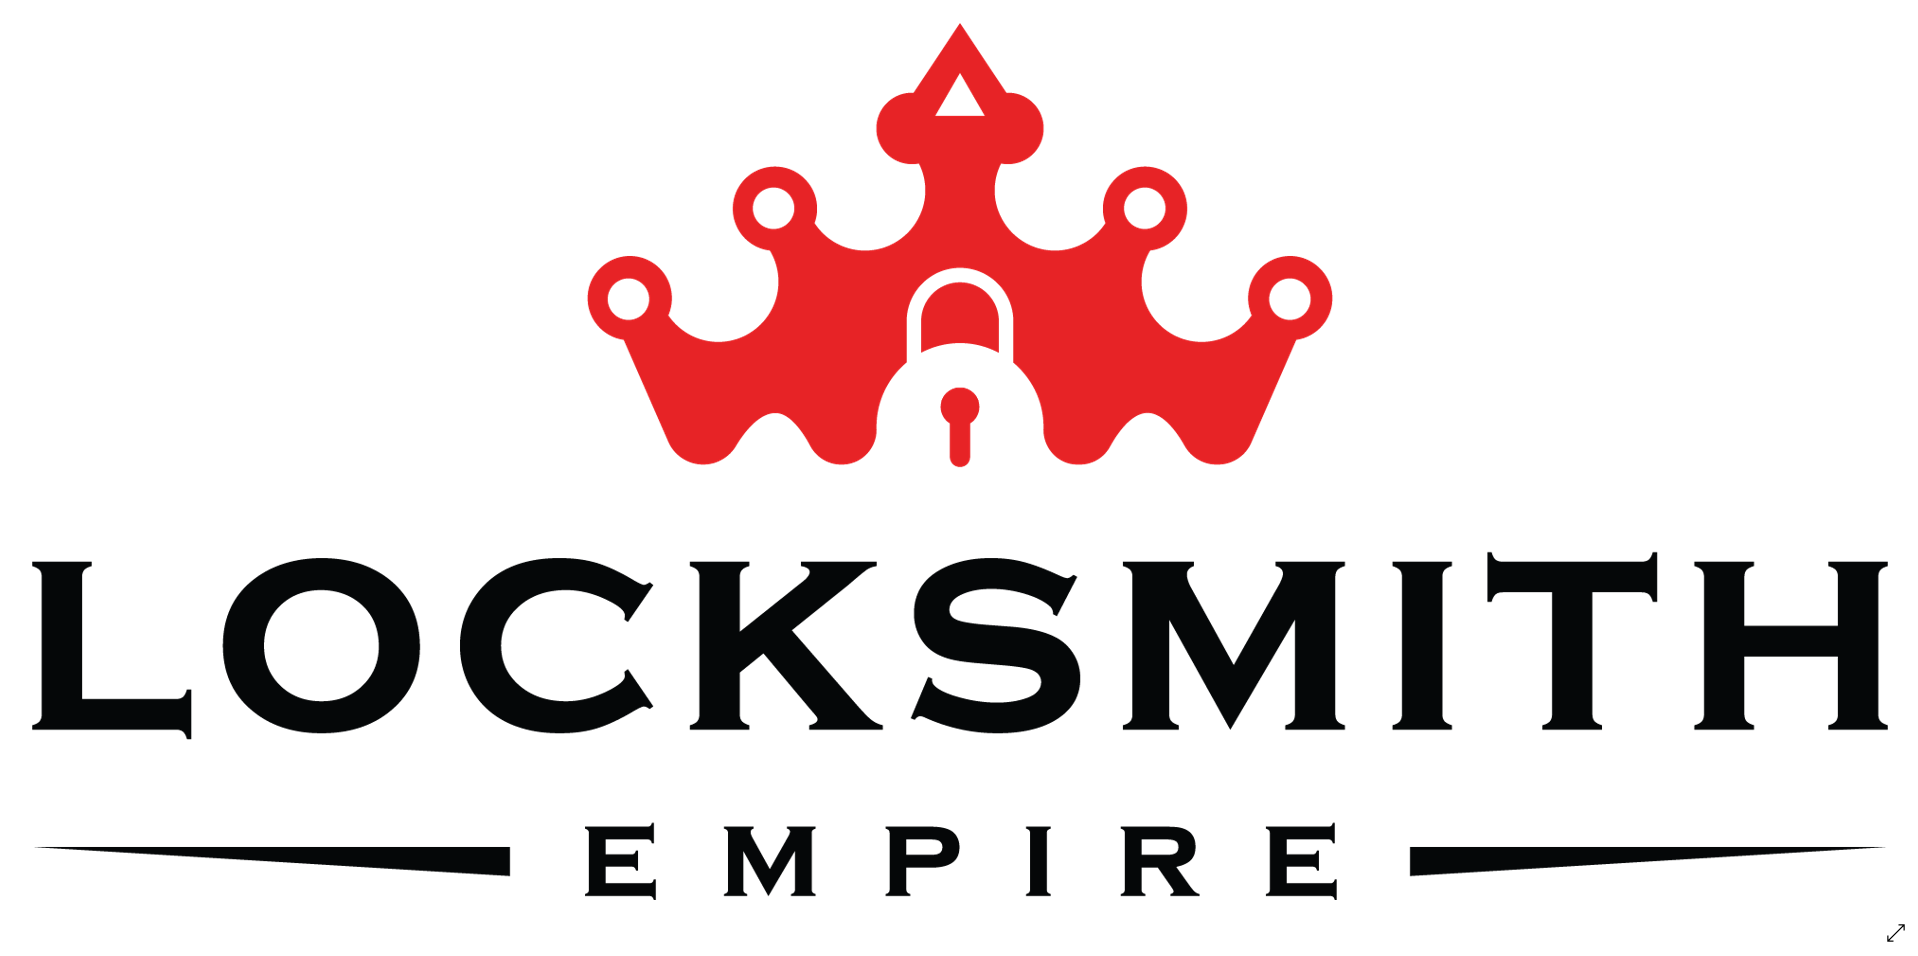 Locksmith Empire